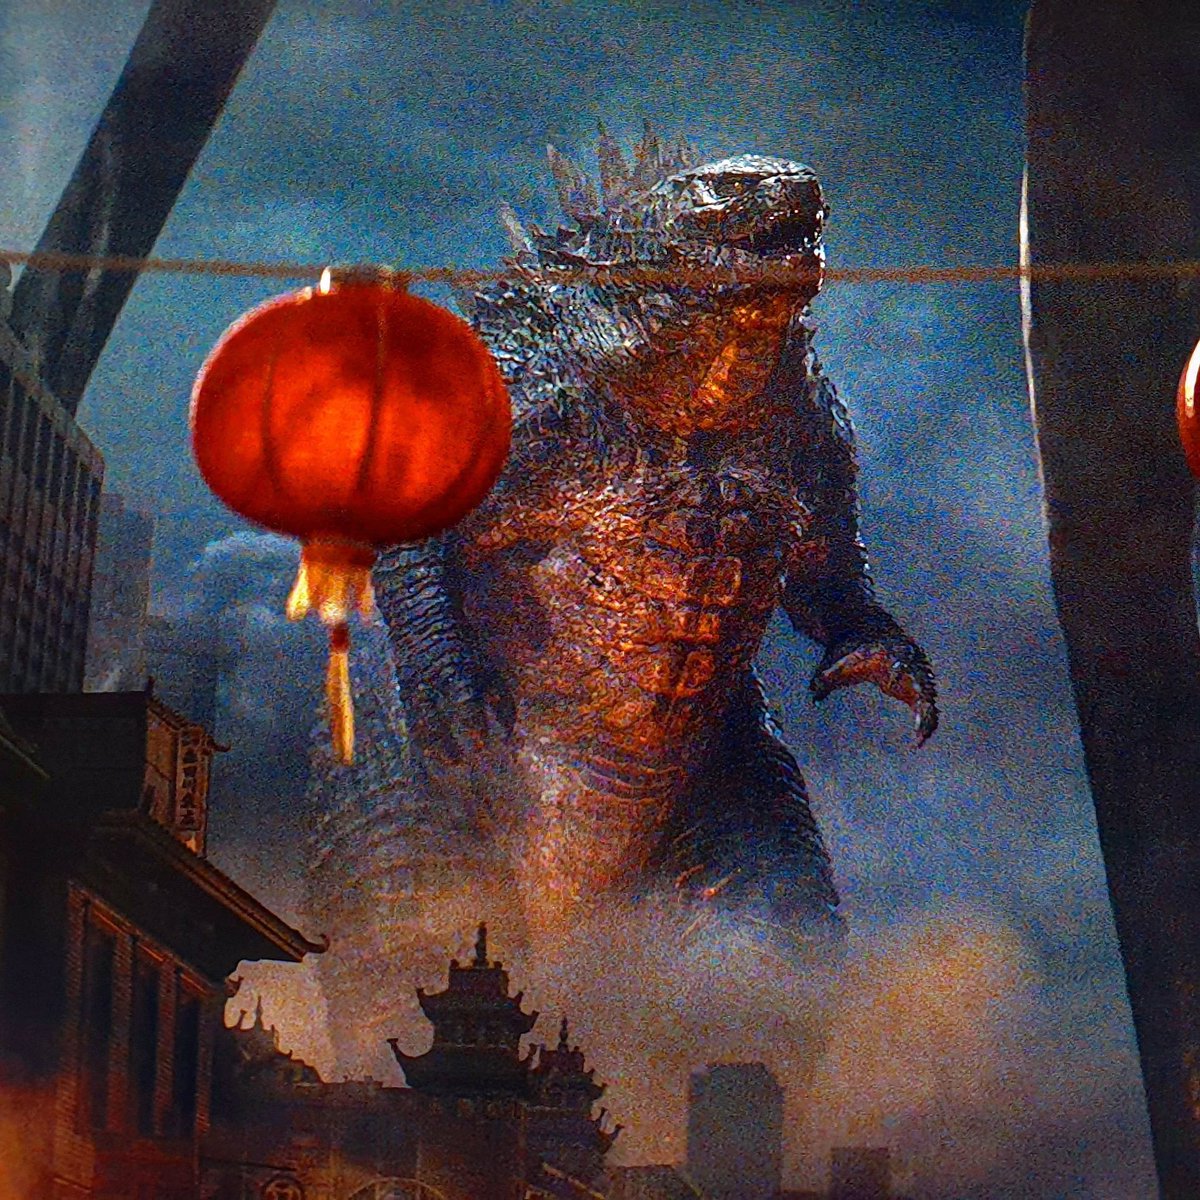 8 years ago today, '#Godzilla' (2014) was released
Happy anniversary @GodzillaMovie!
#godzilla2014 #godzillakingofthemonsters #godzilla3 #godzillavskong #godzillavskong2 #legendarygodzilla #titanusgojira #titanusgodzilla #muto #godzillavsmuto #kaiju #legendarykaiju  #MonsterVerse